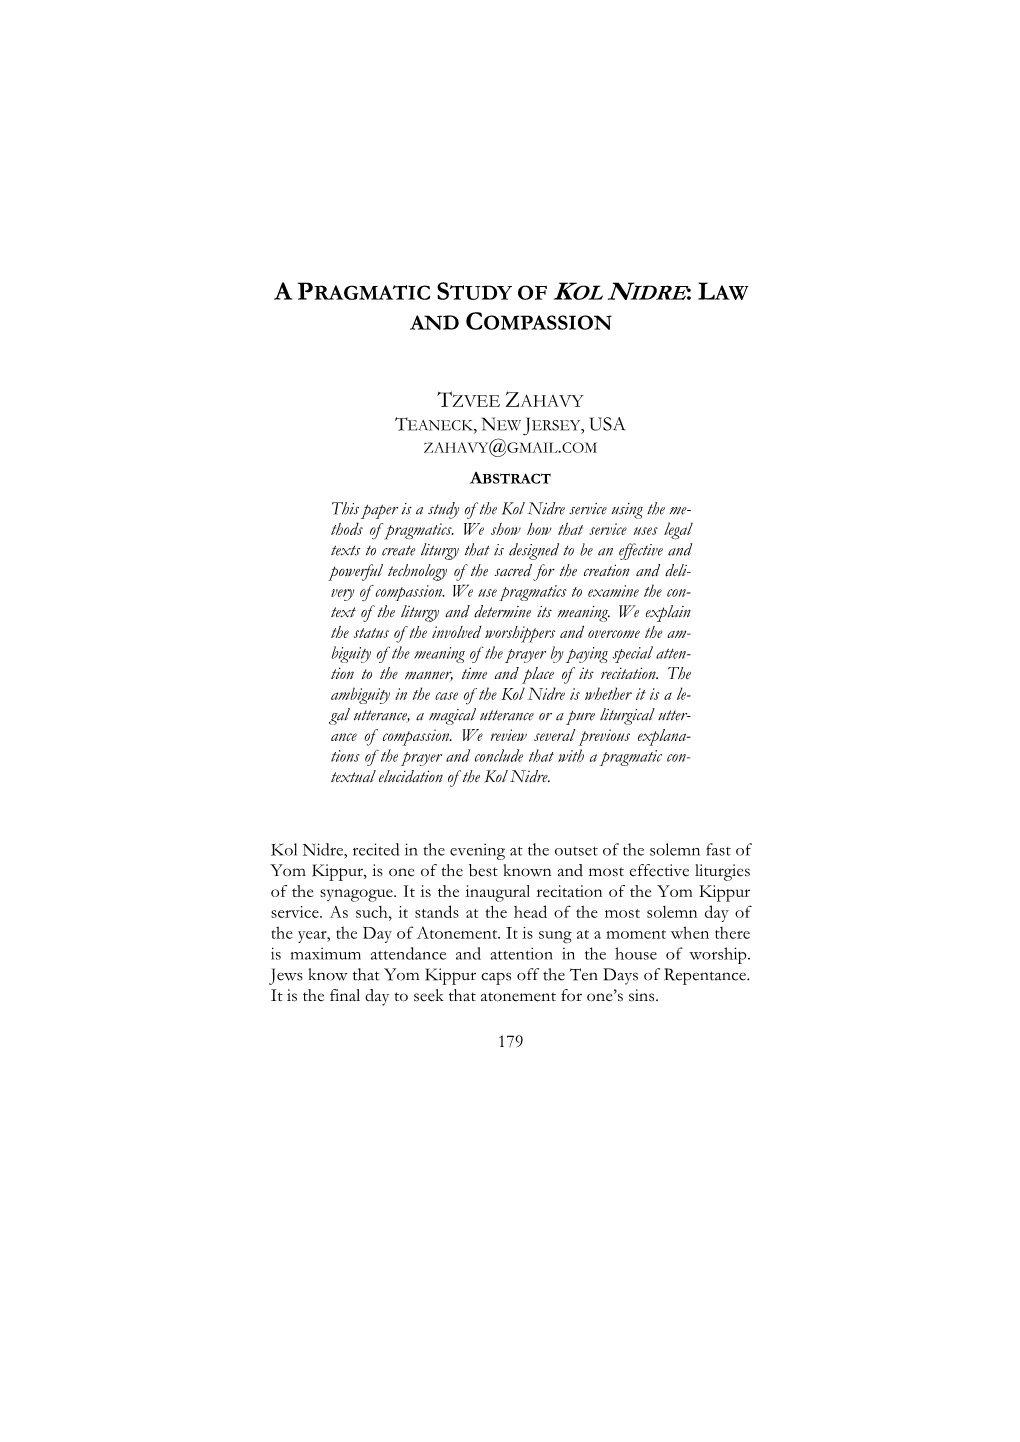 A Pragmatic Study of Kol Nidre: Law and Compassion